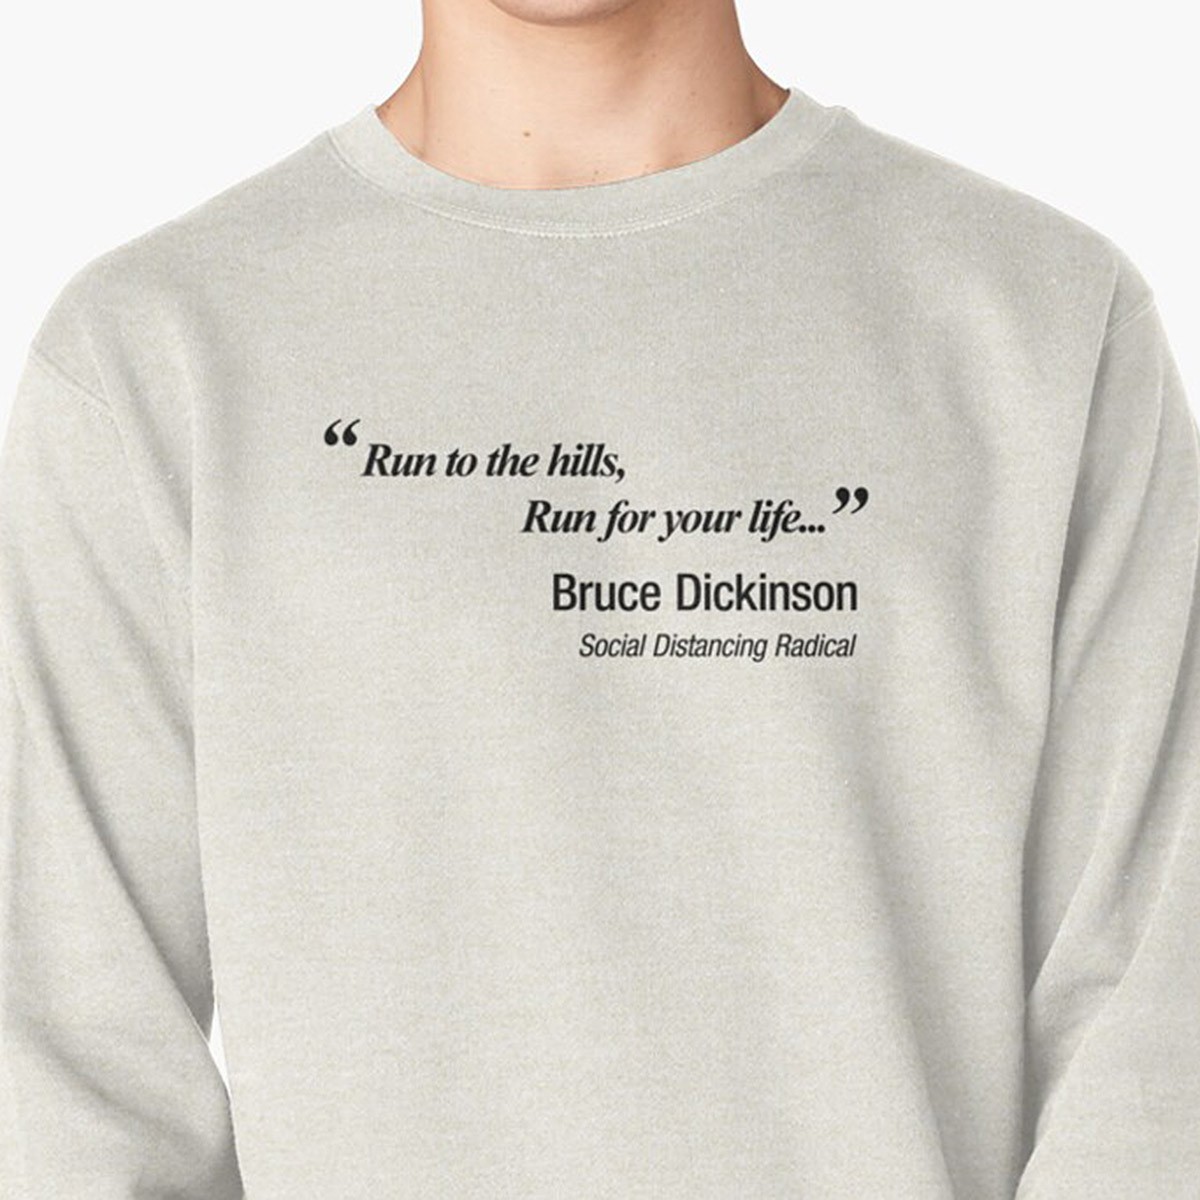 Run to the hills! - Bruce Dickinson & Iron Maiden Parody sweatshirt by NTK Apparel